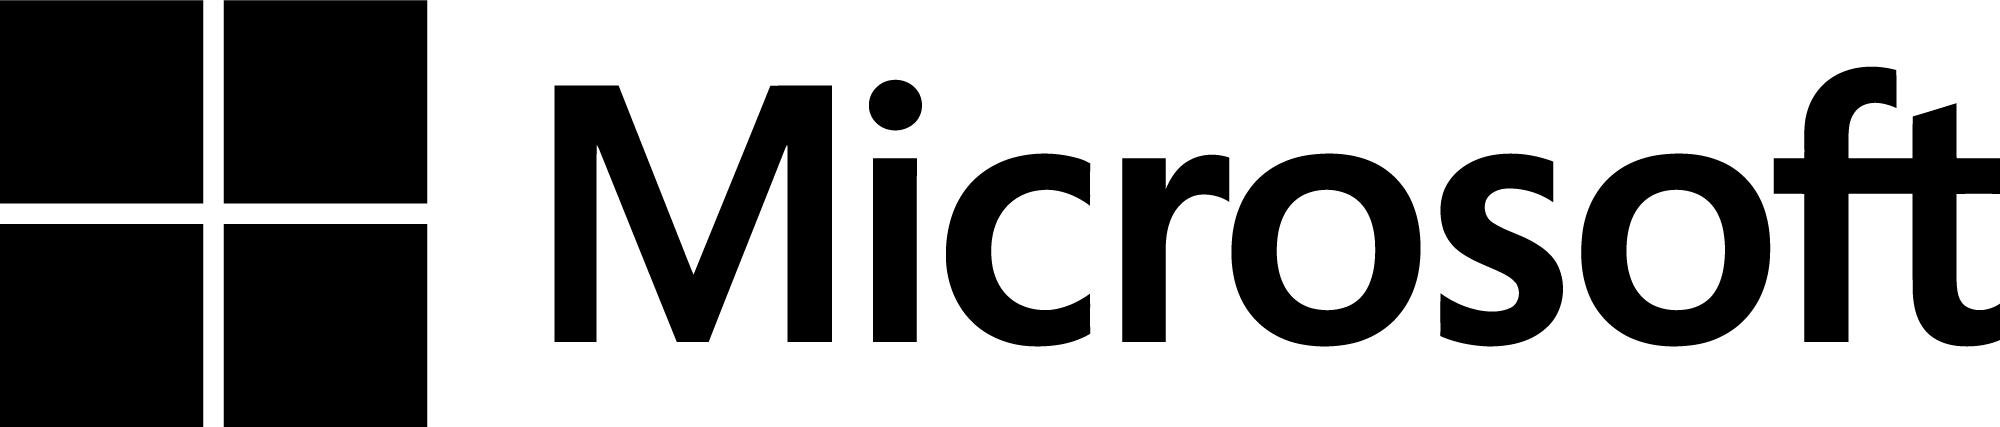 microsoft logo black png